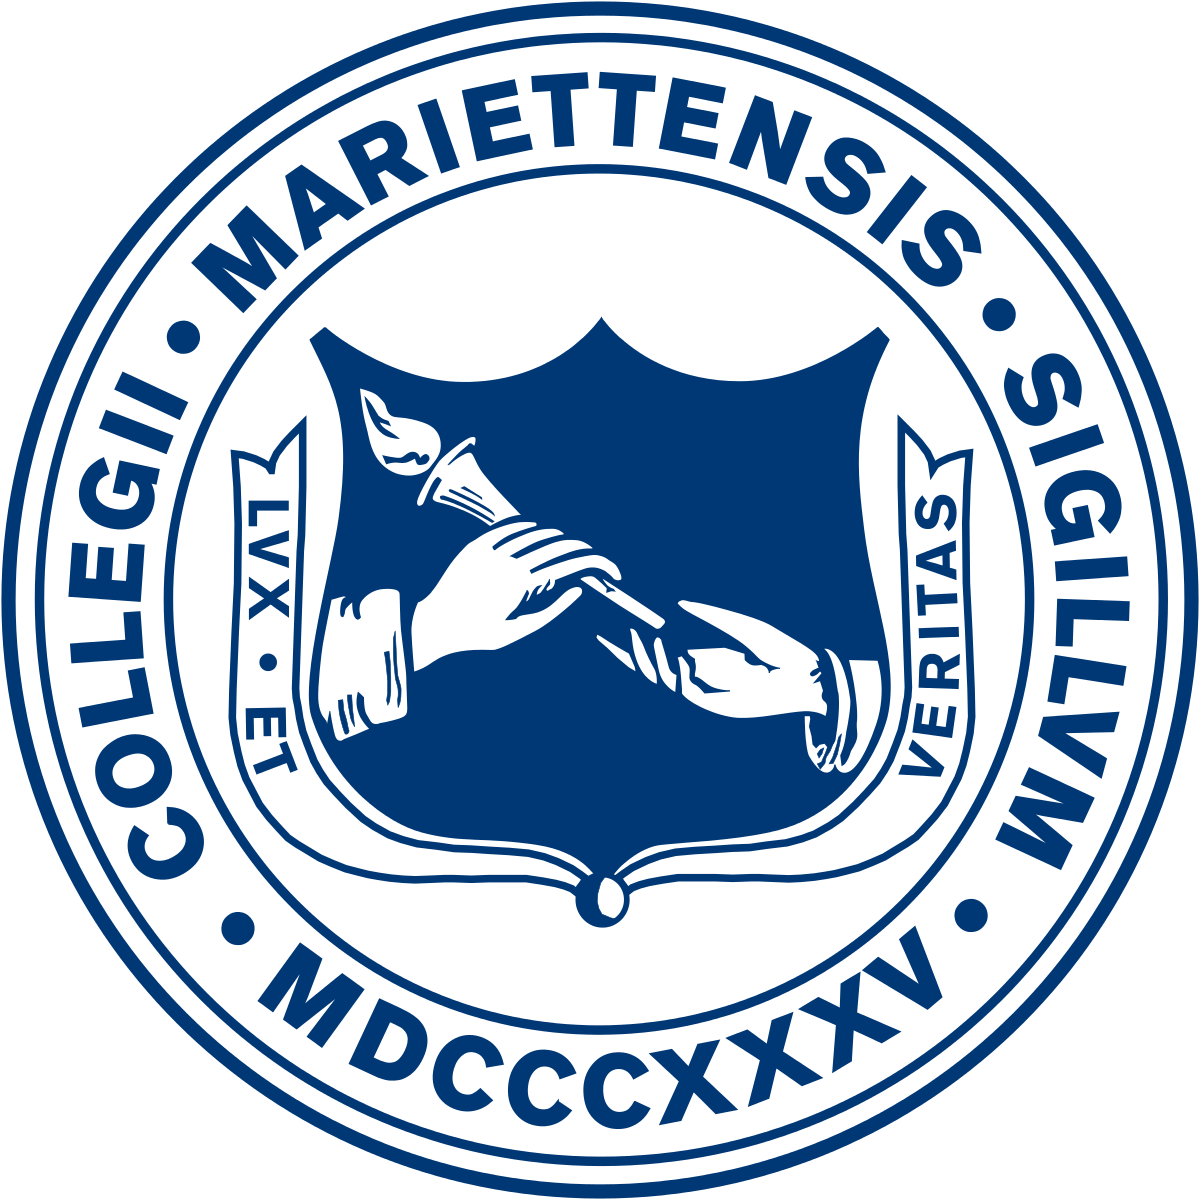 Marietta Logo - Marietta College